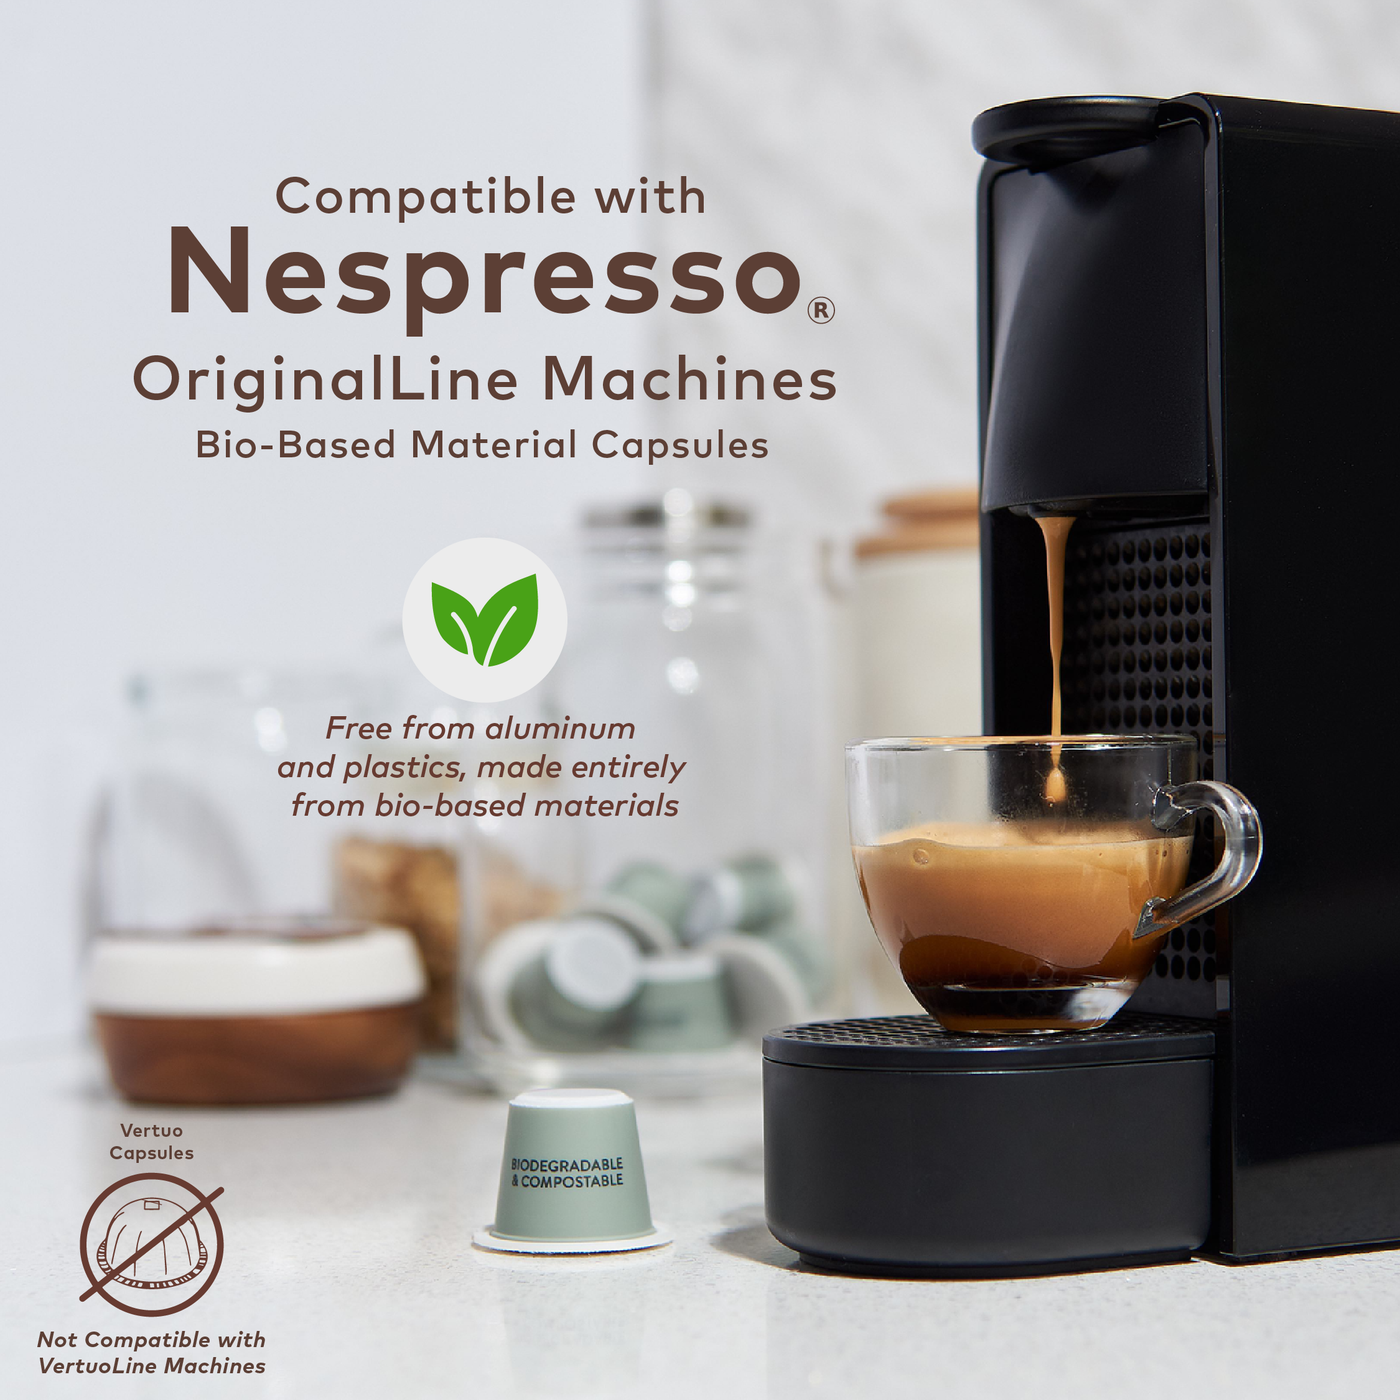 Dark & Medium Roast Nespresso Compatible (Solo Las and Bella 4 Pack)